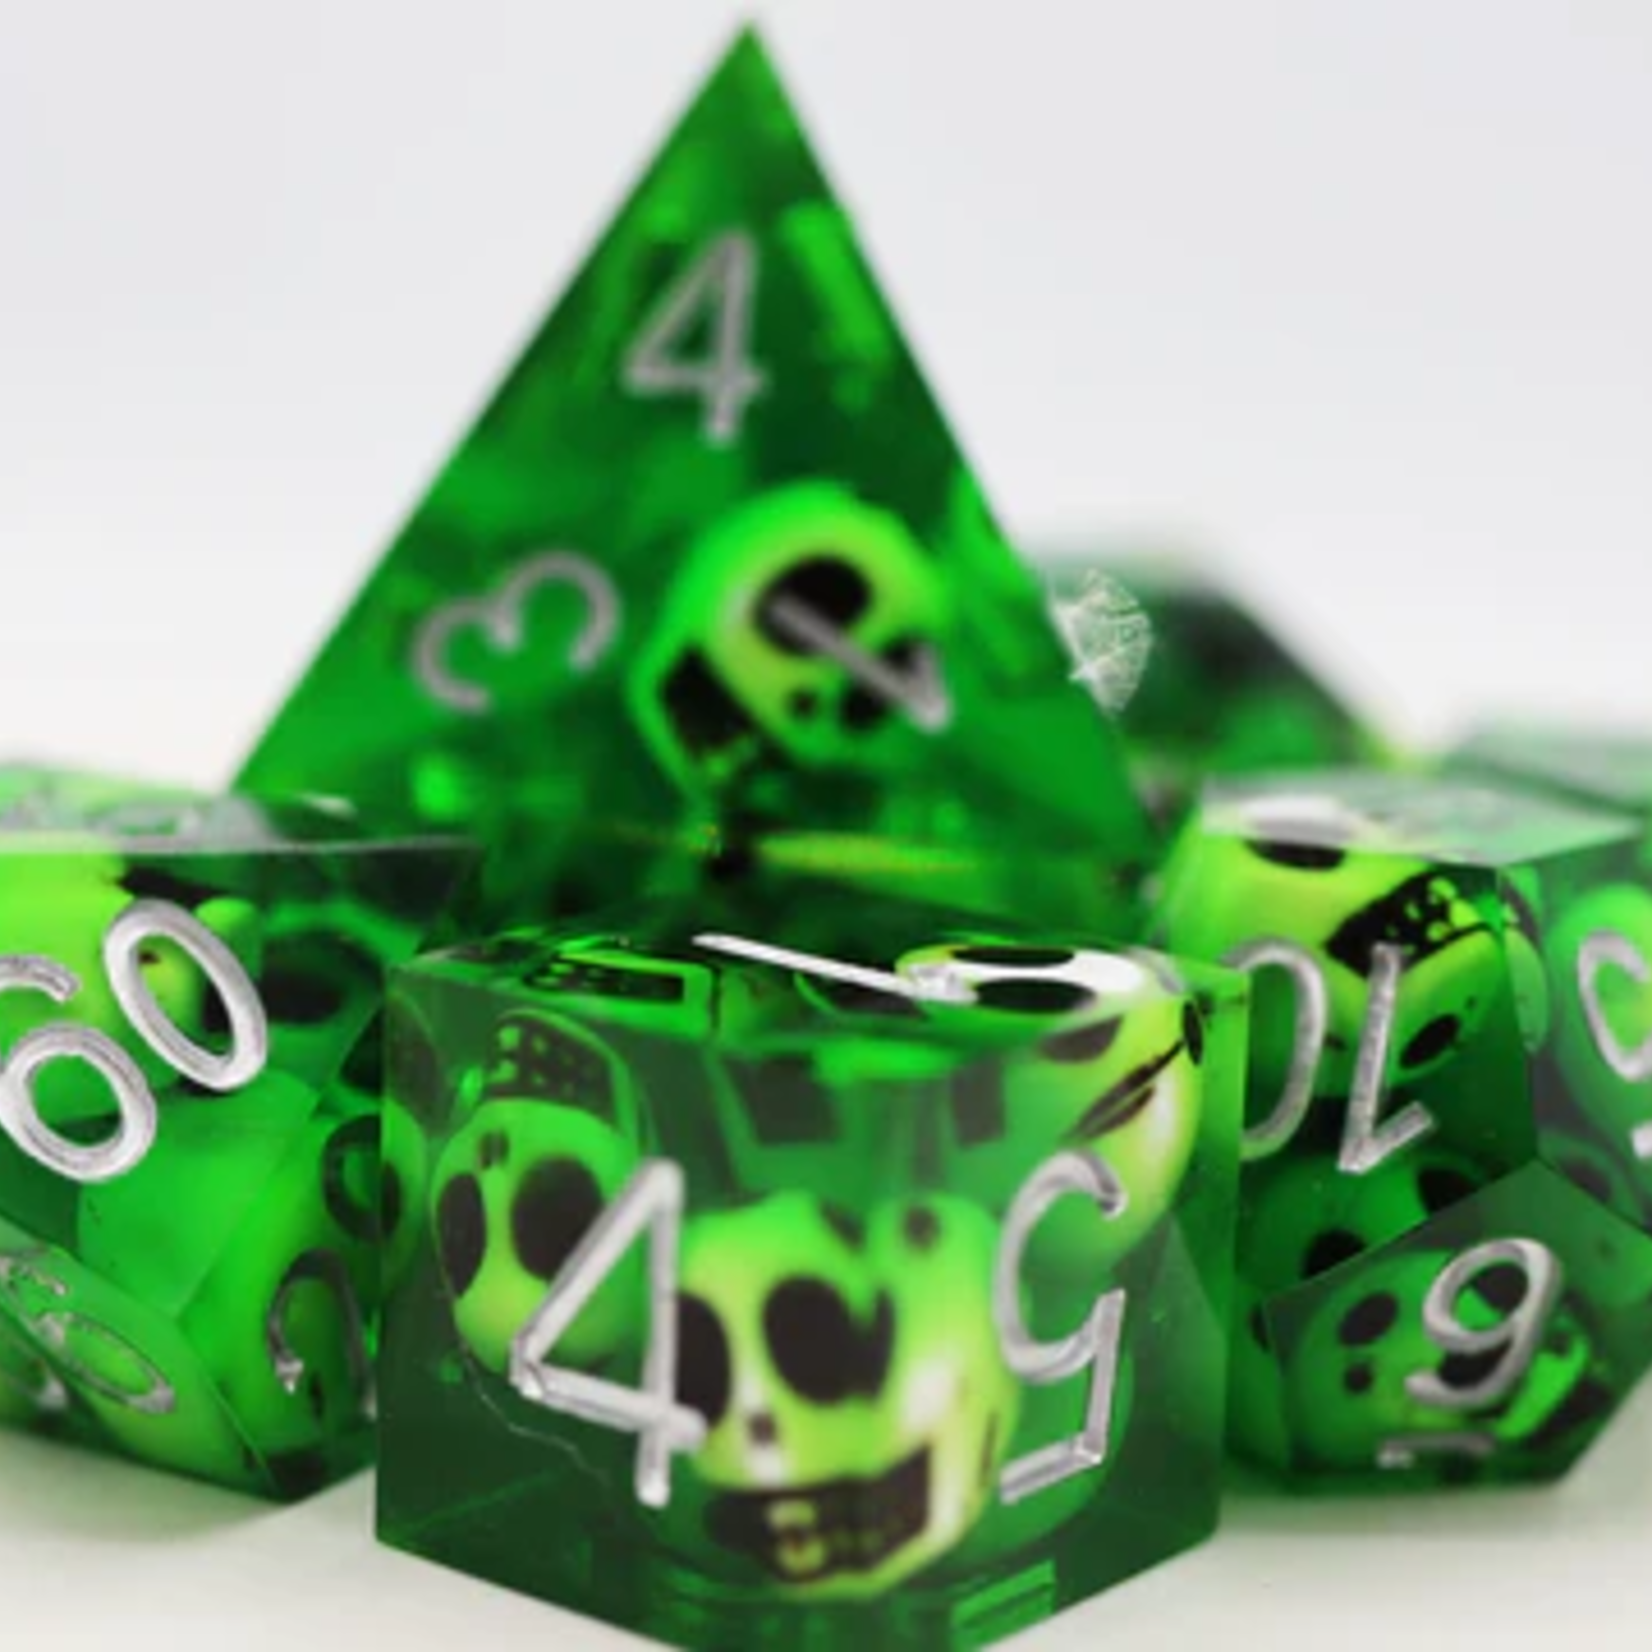 Foam Brain Games Sharp Edge Green Skulls Resin RPG Dice 7 die set